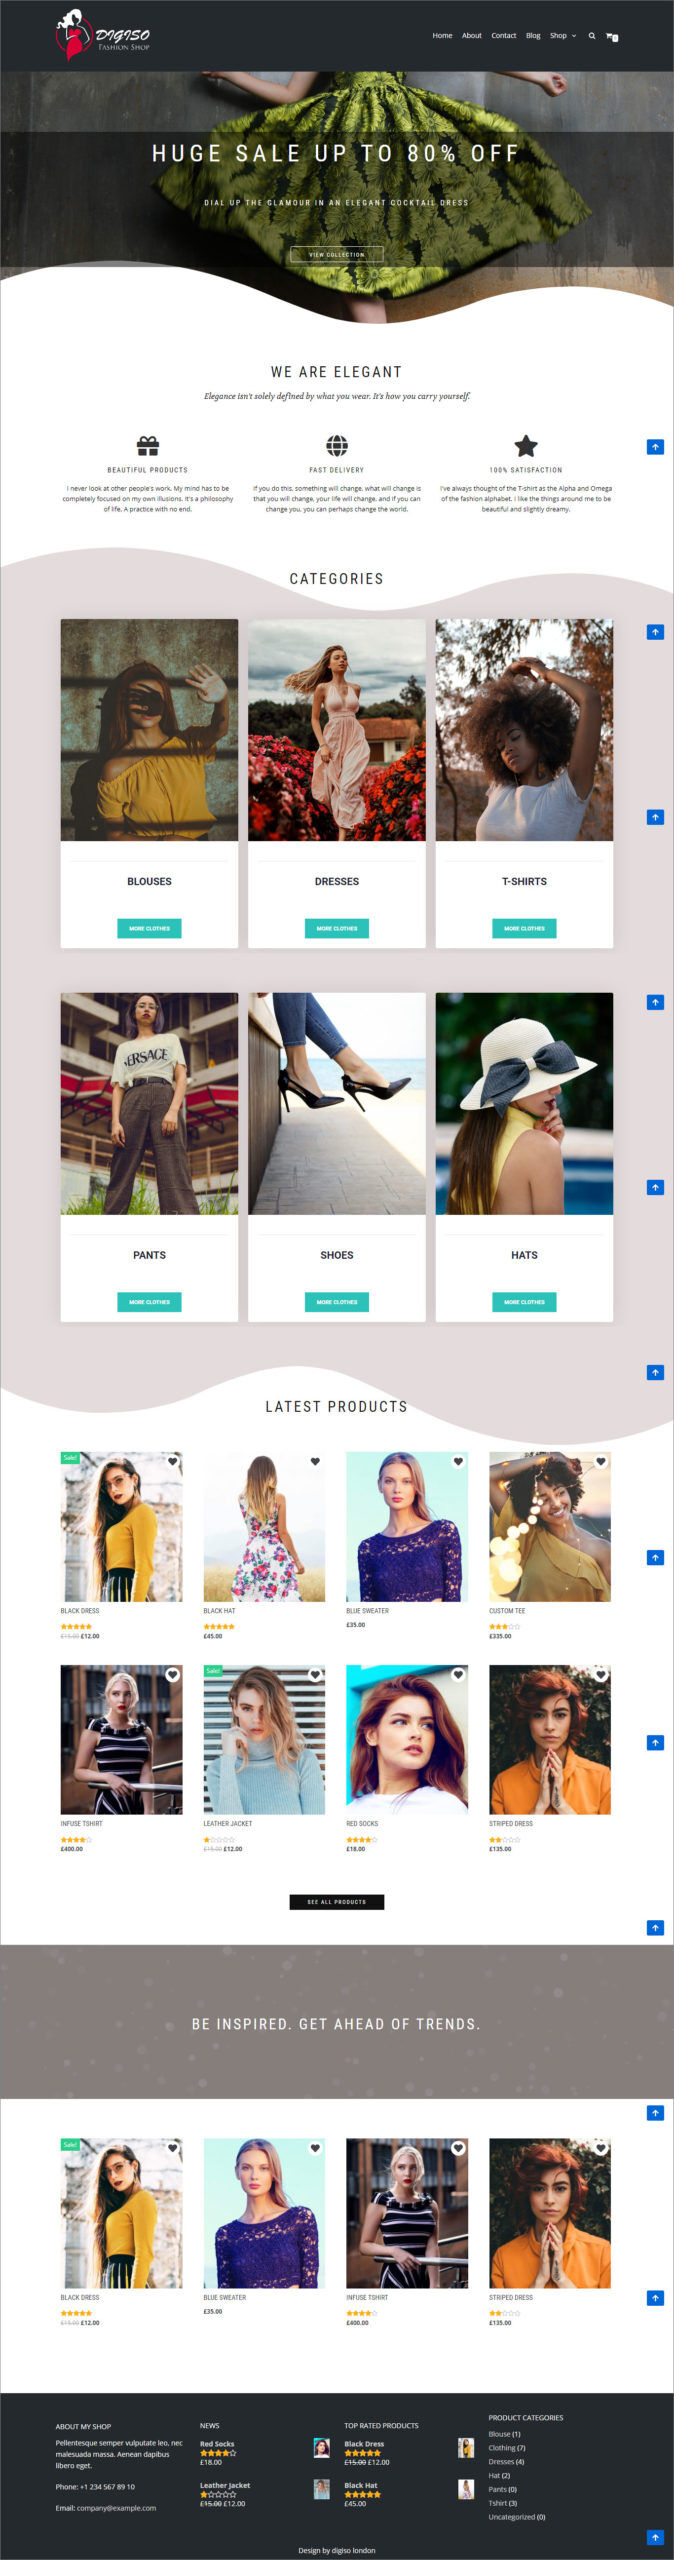 Ecommerce Website For Fashion Shop